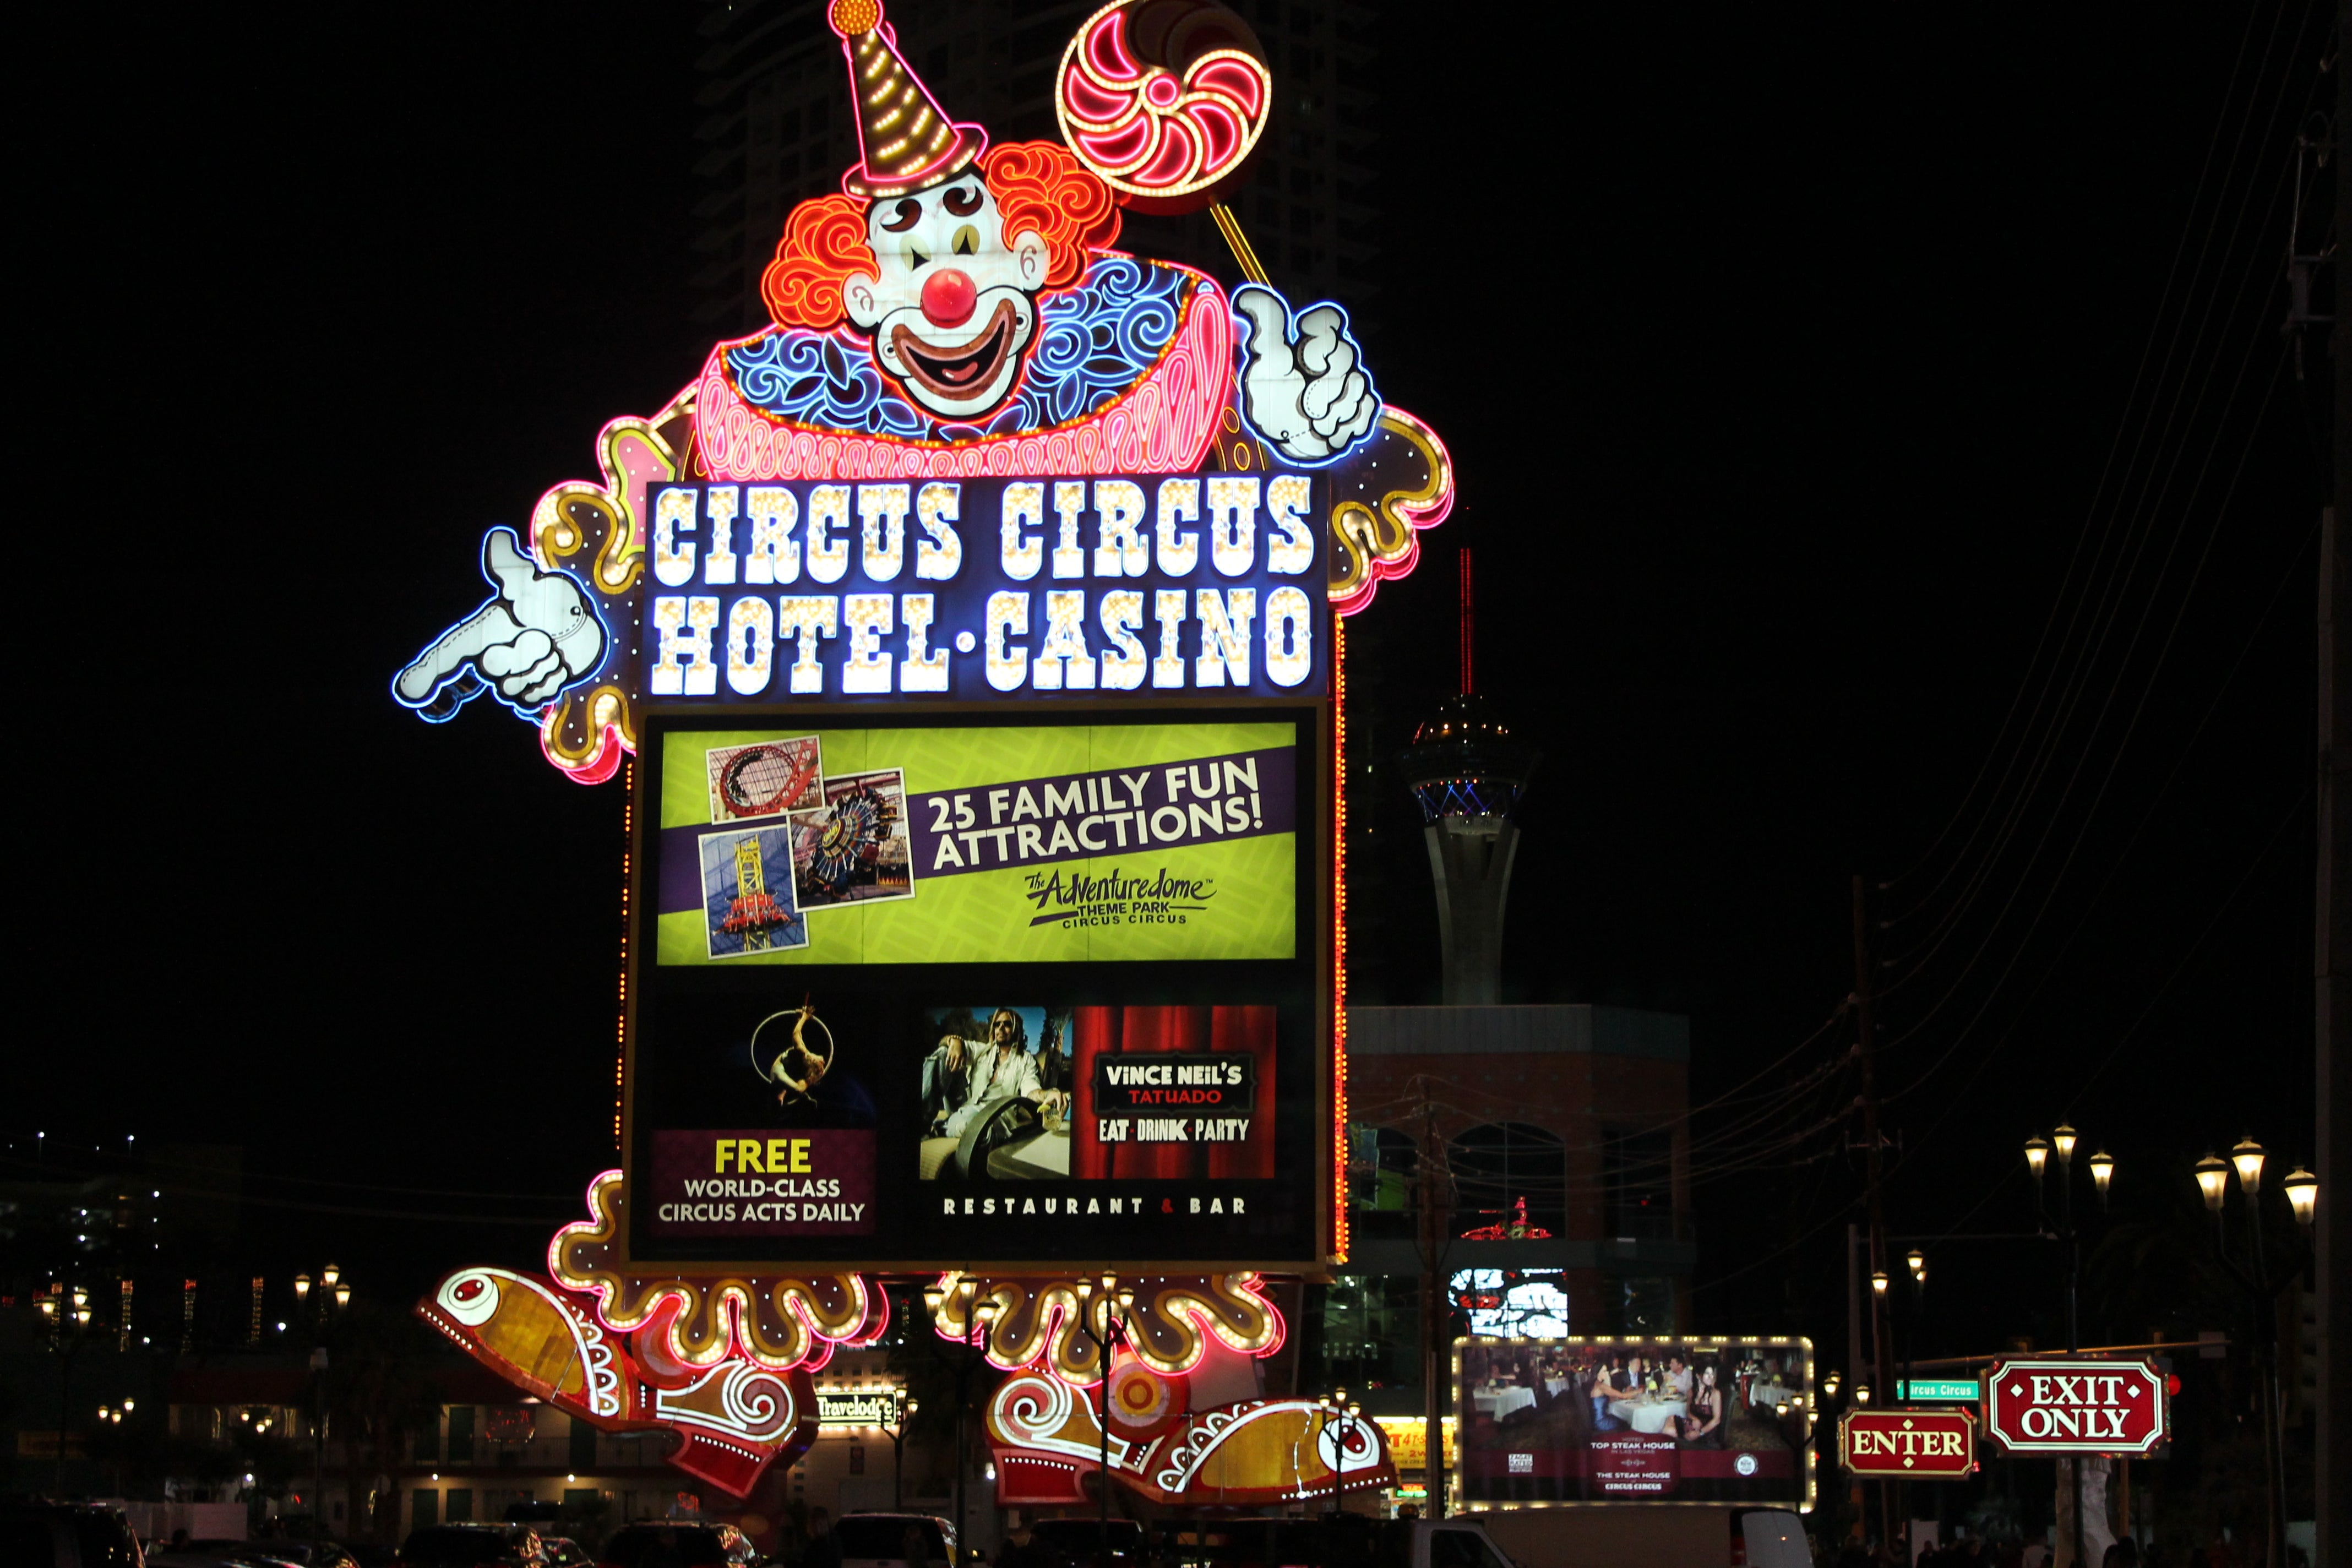 Located at Circus Circus